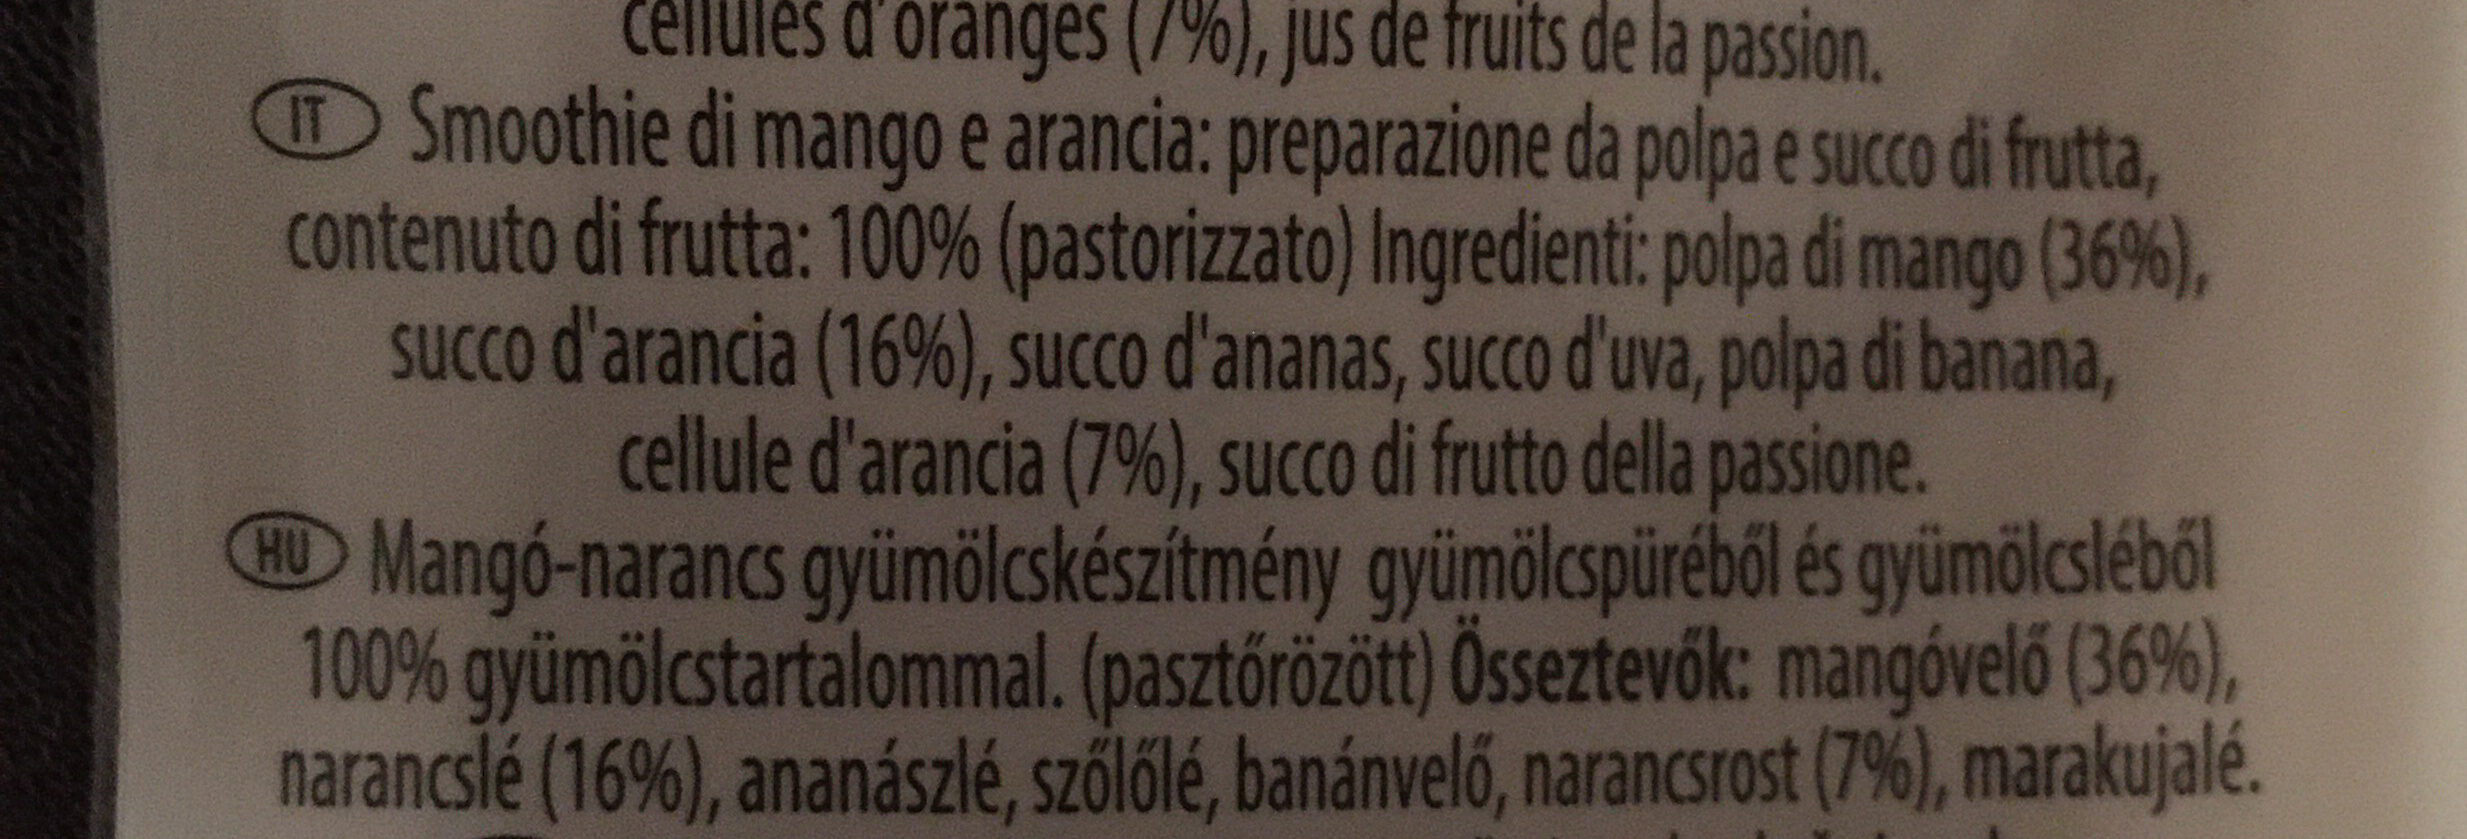 Smoothie mango orange - Ingredienti